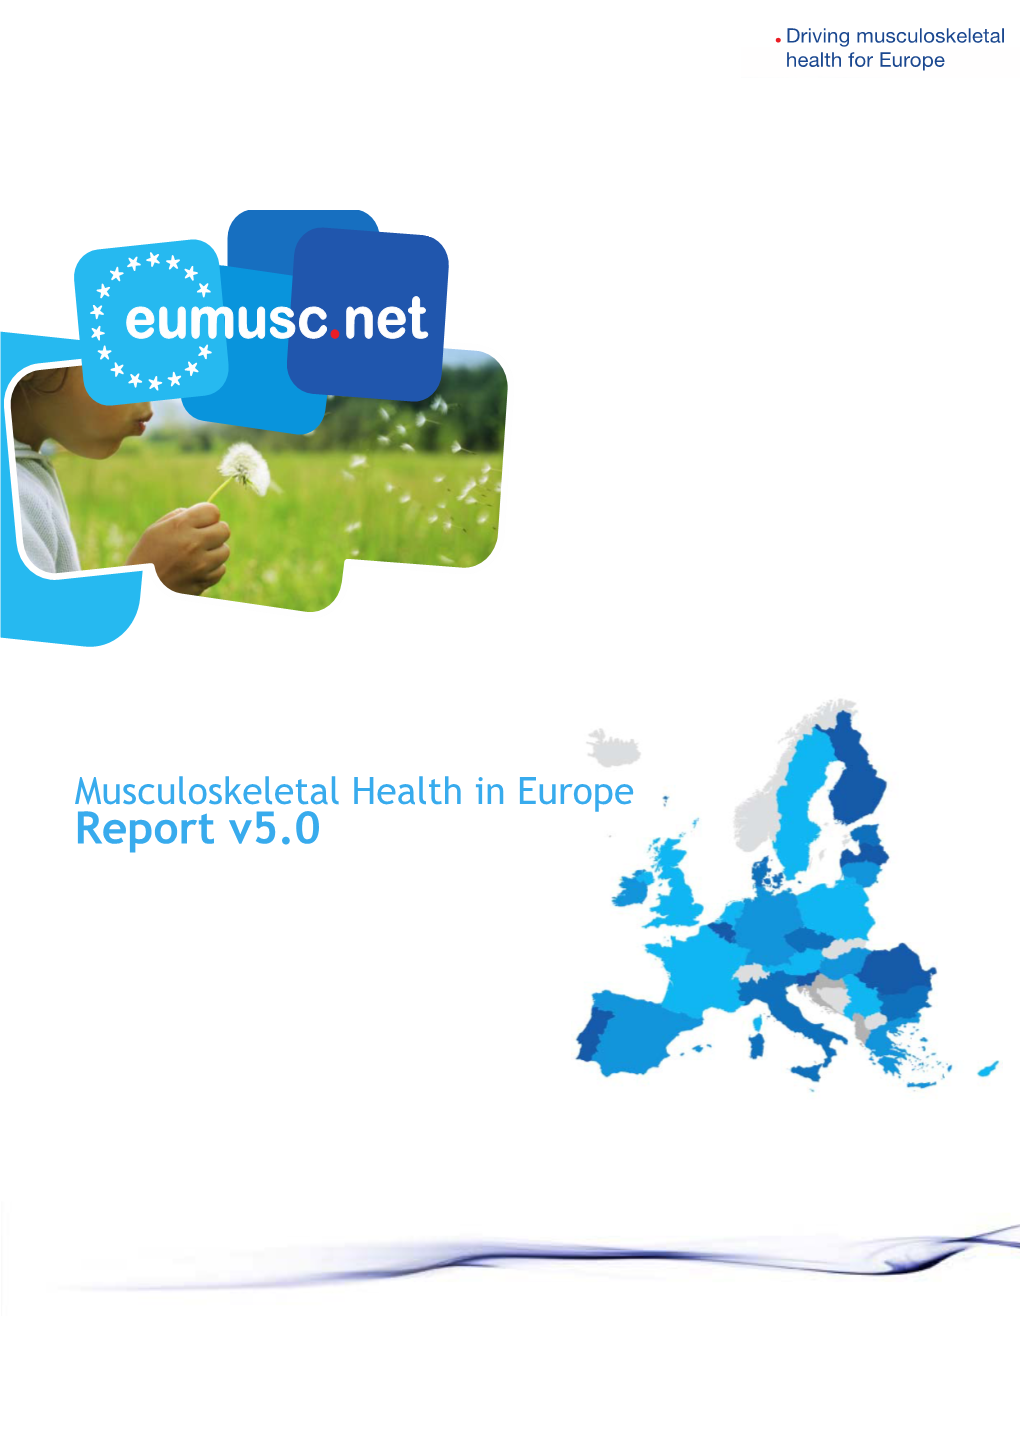 Musculoskeletal Health Status in Europe